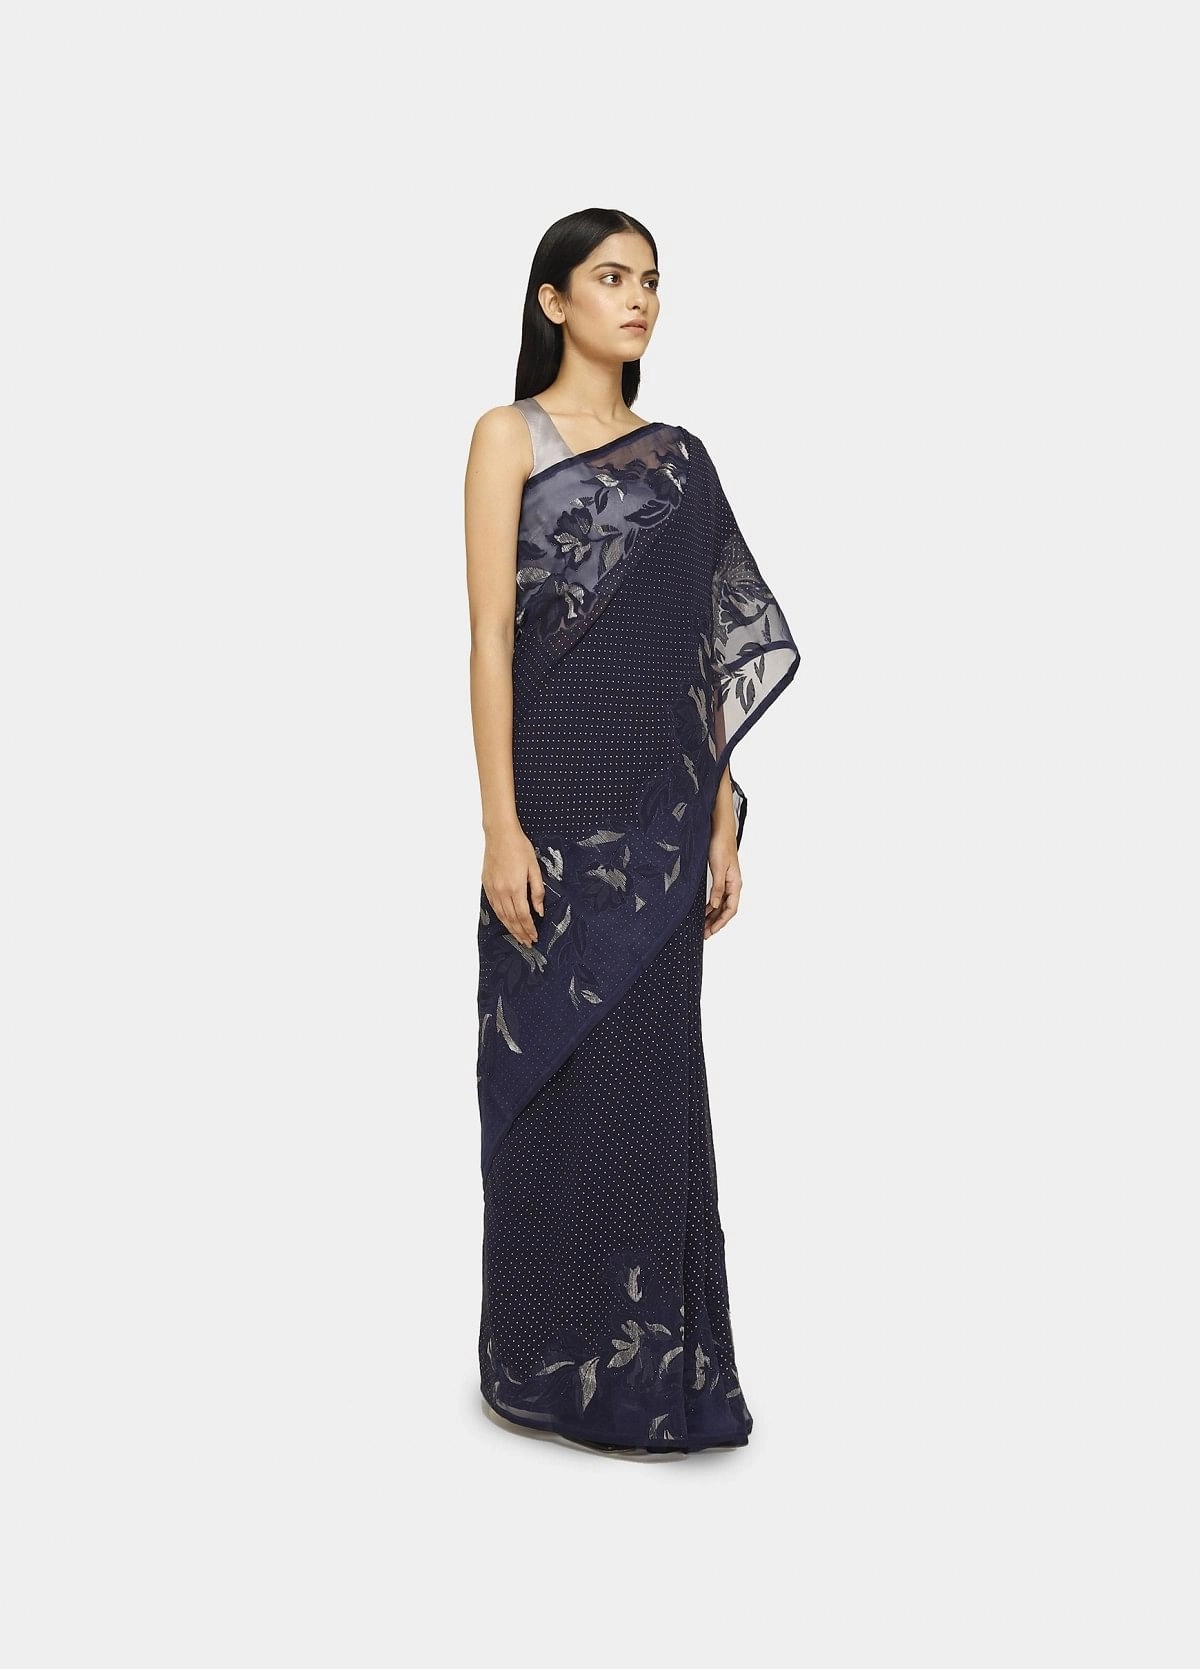 The Embroidered Silk Georgette Blossom Saree